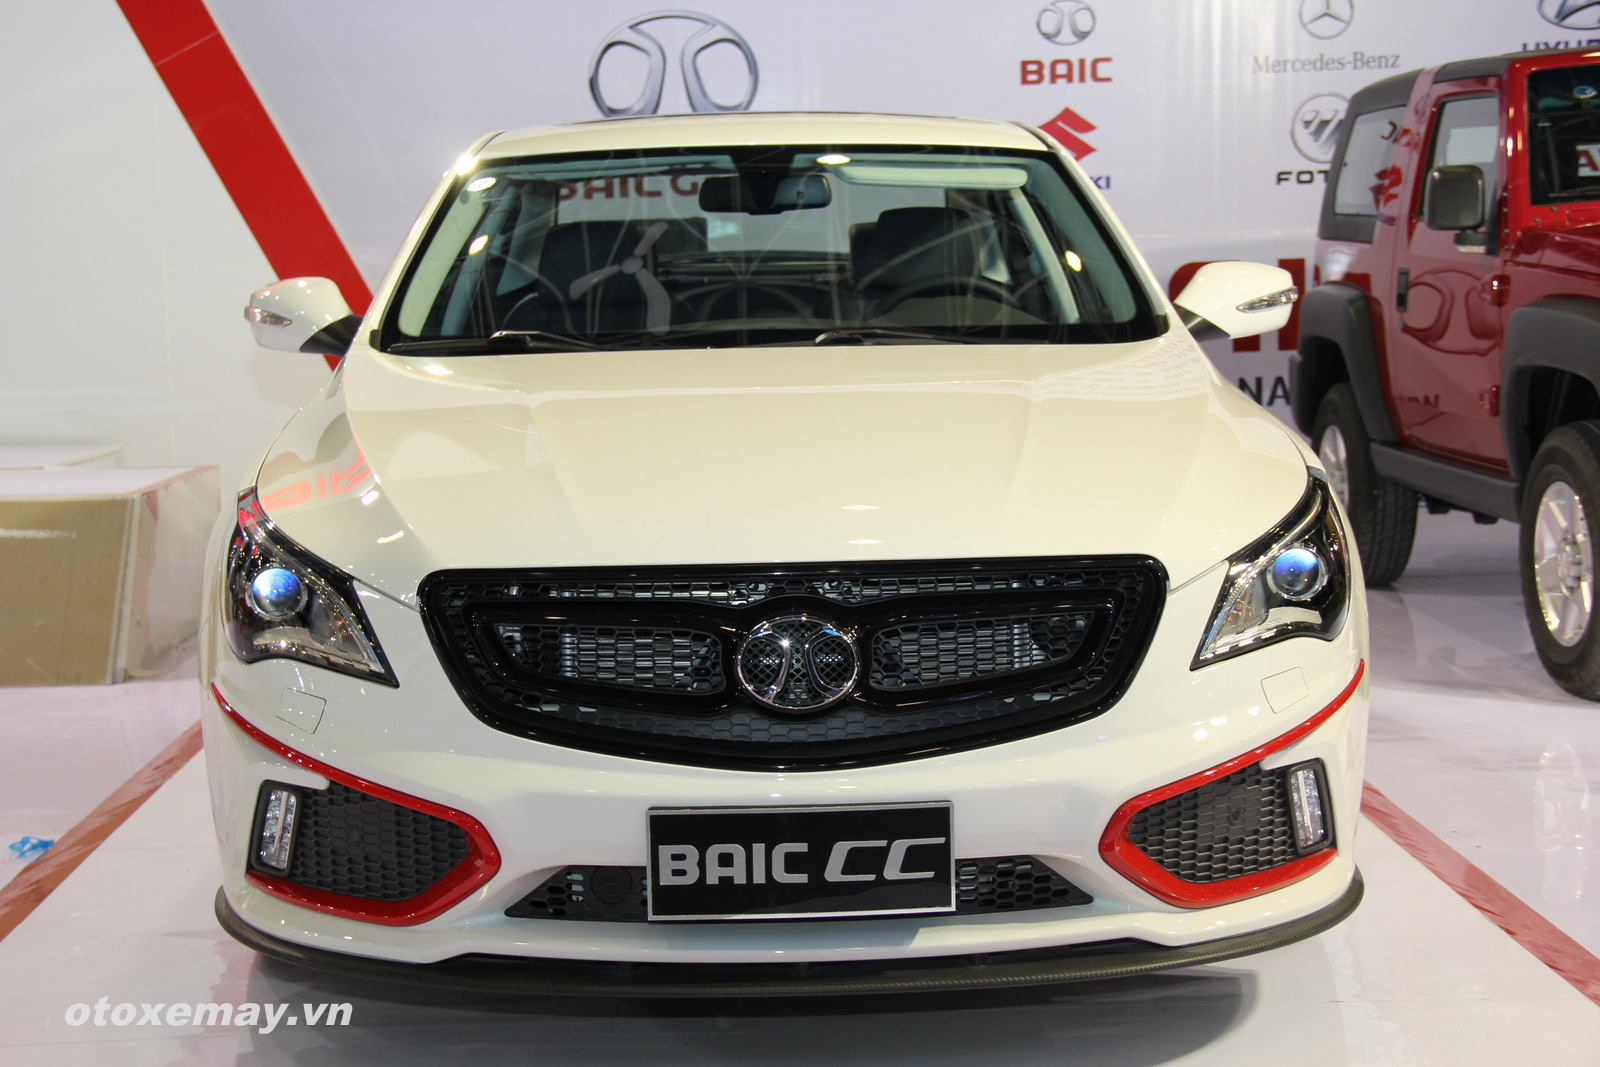 VIMS 2015: Cận cảnh sedan BAIC CC của Trung Quốc 2